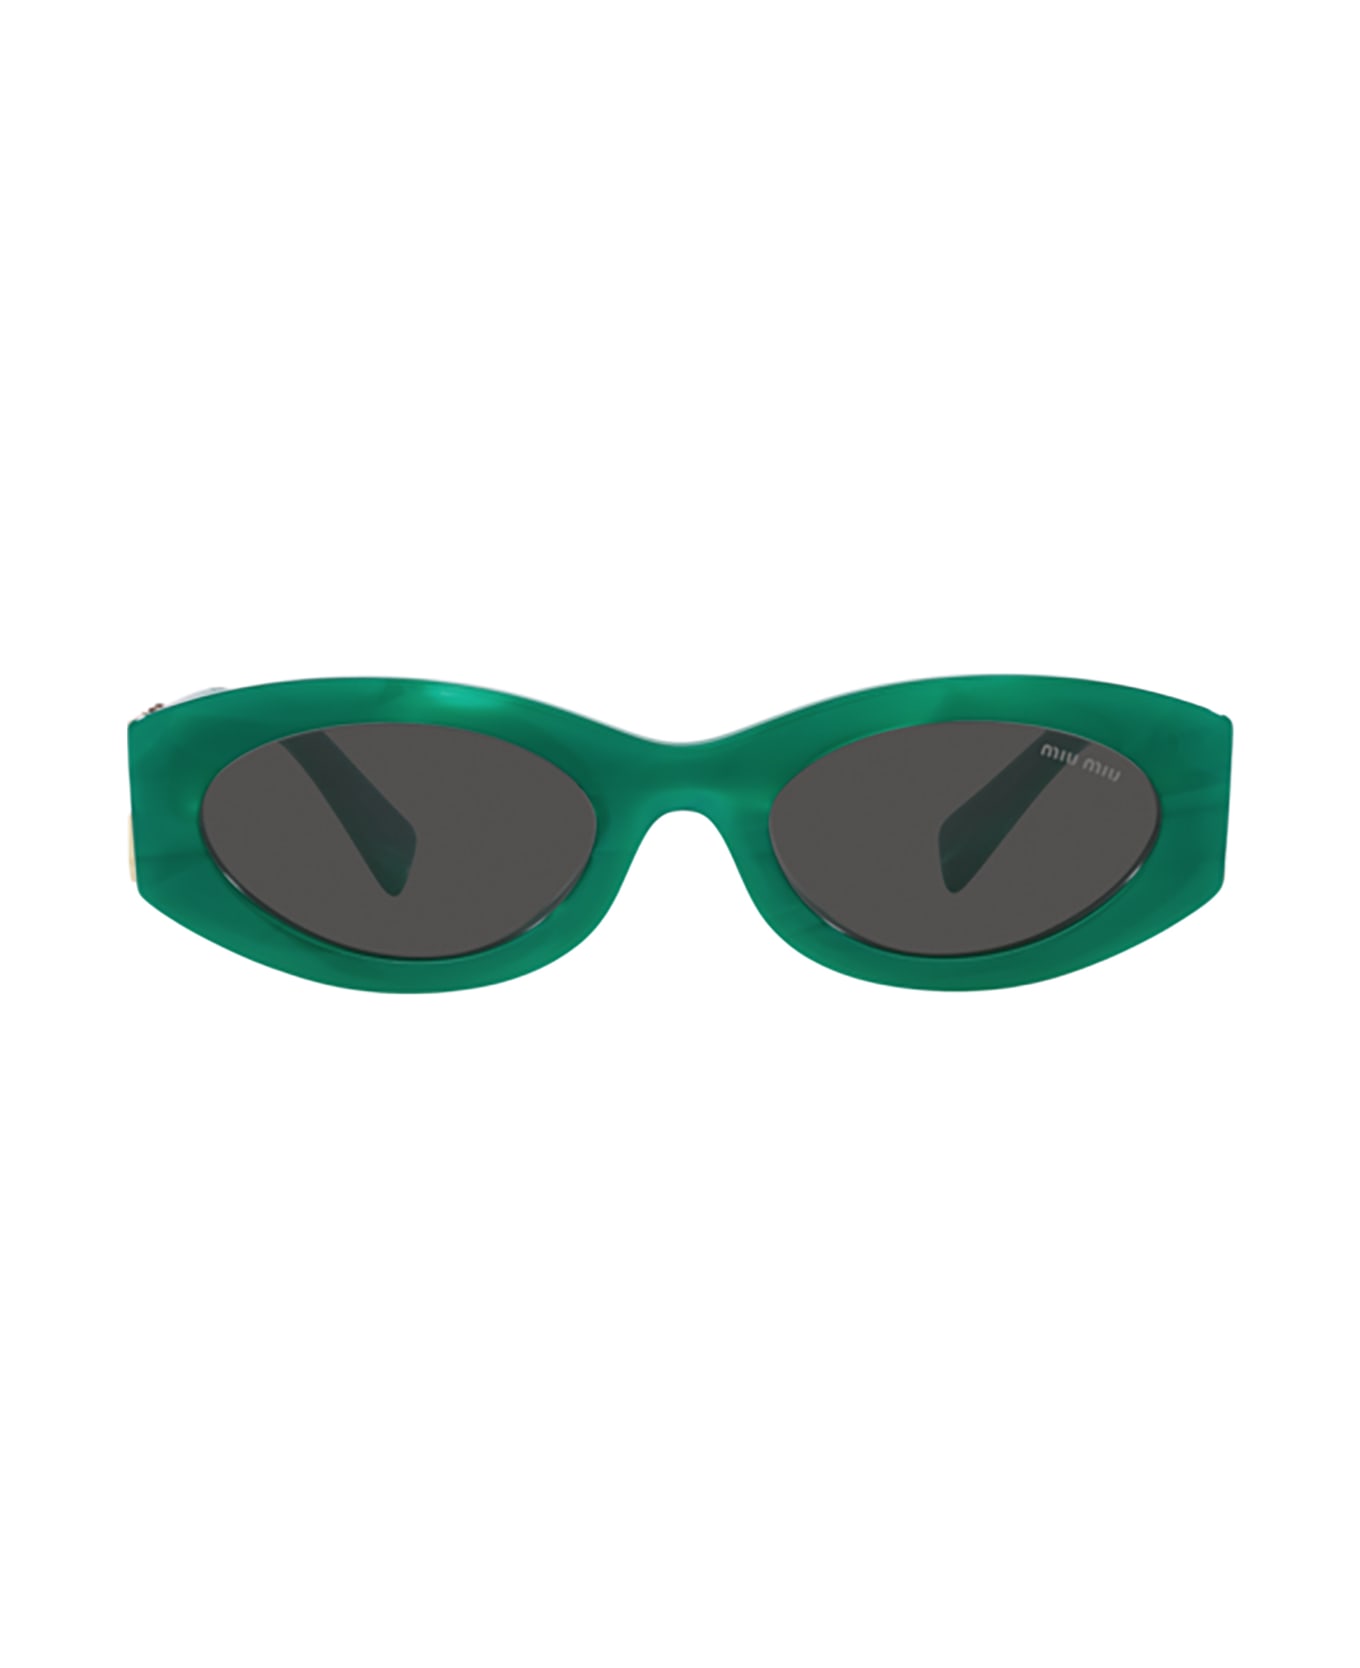 Miu Miu Eyewear Mu 11ws Green Sunglasses - Green